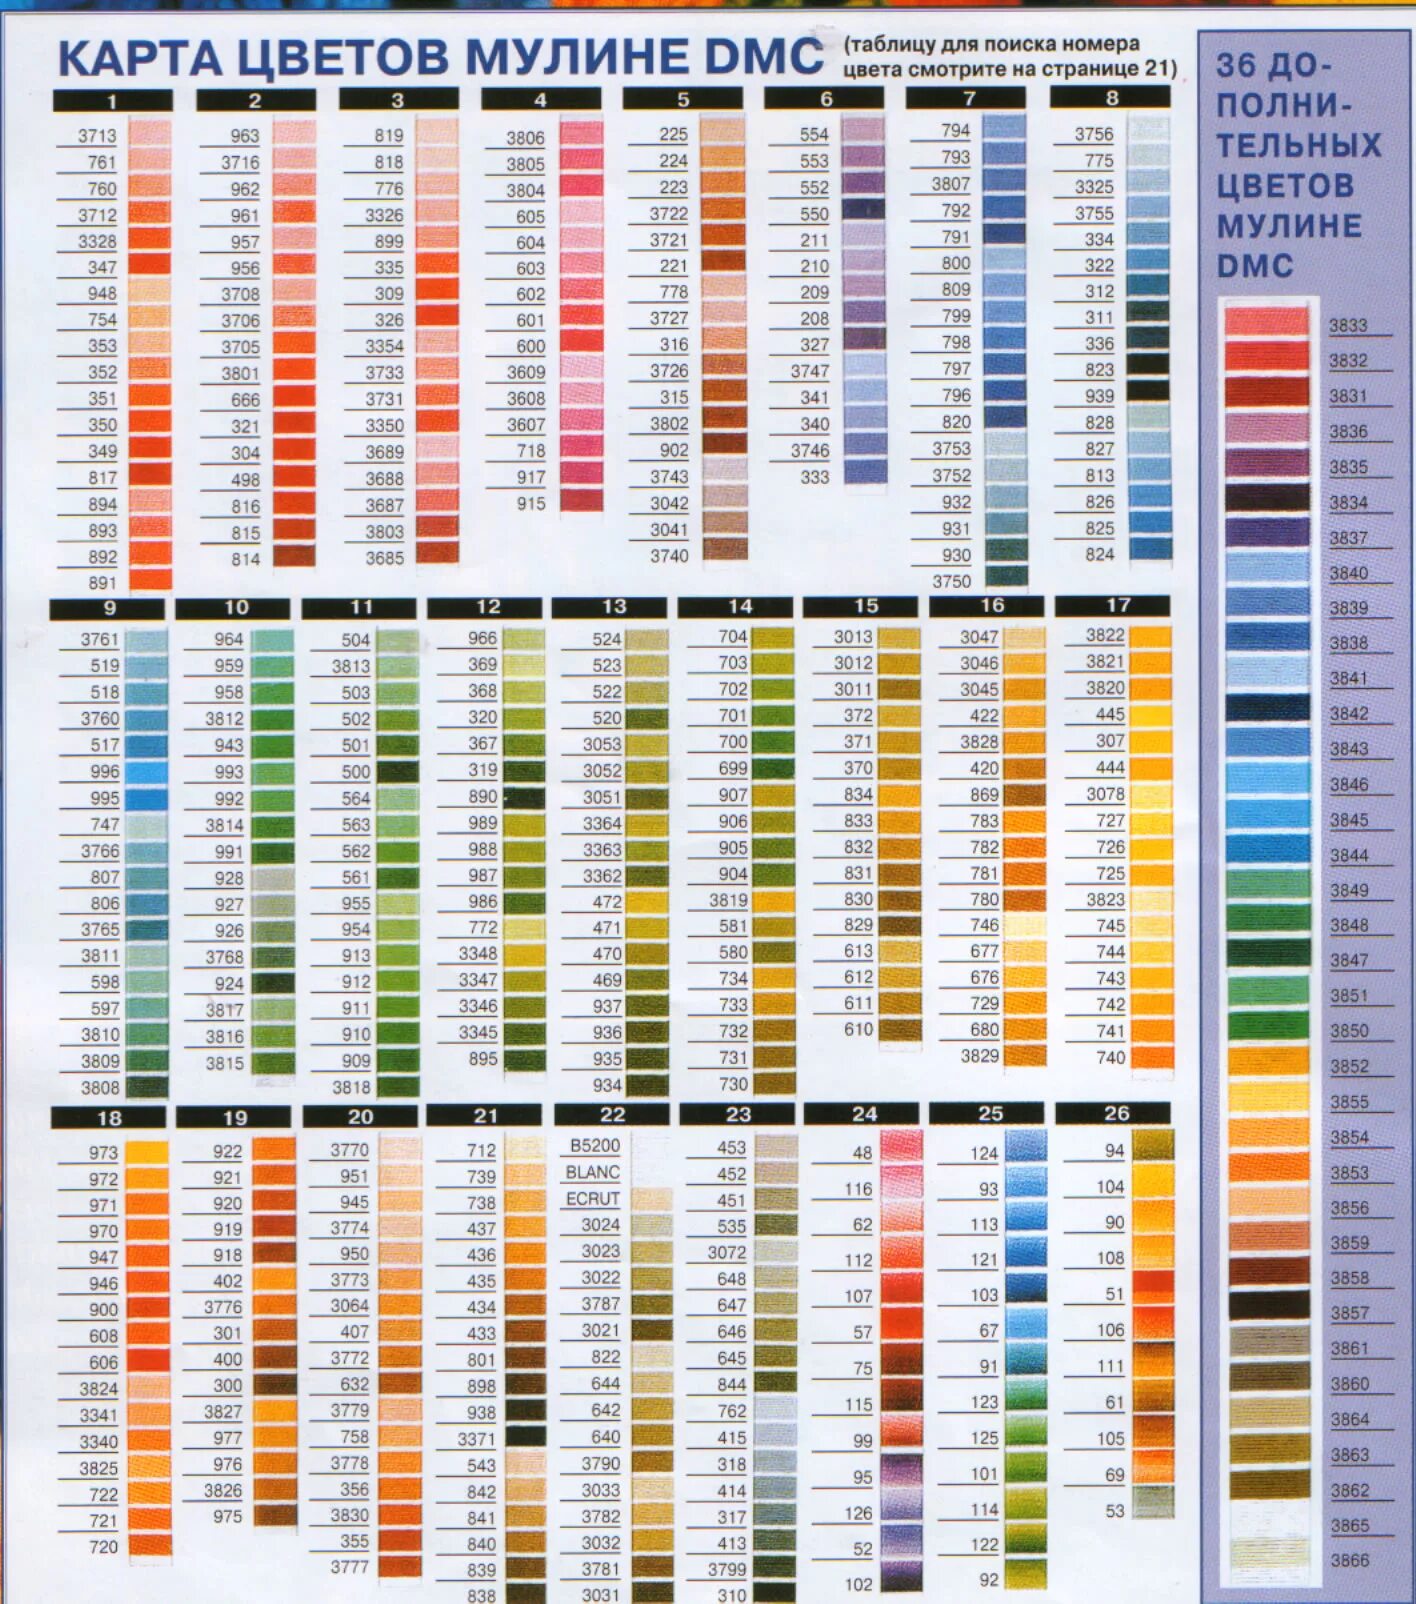 Таблица цветов ниток гамма с названиями. Таблица цветов ниток мулине СХС. Цветовая палитра мулине ДМС. Нитки мулине ДМС таблица. Нитки мулине DMC таблица цветов.